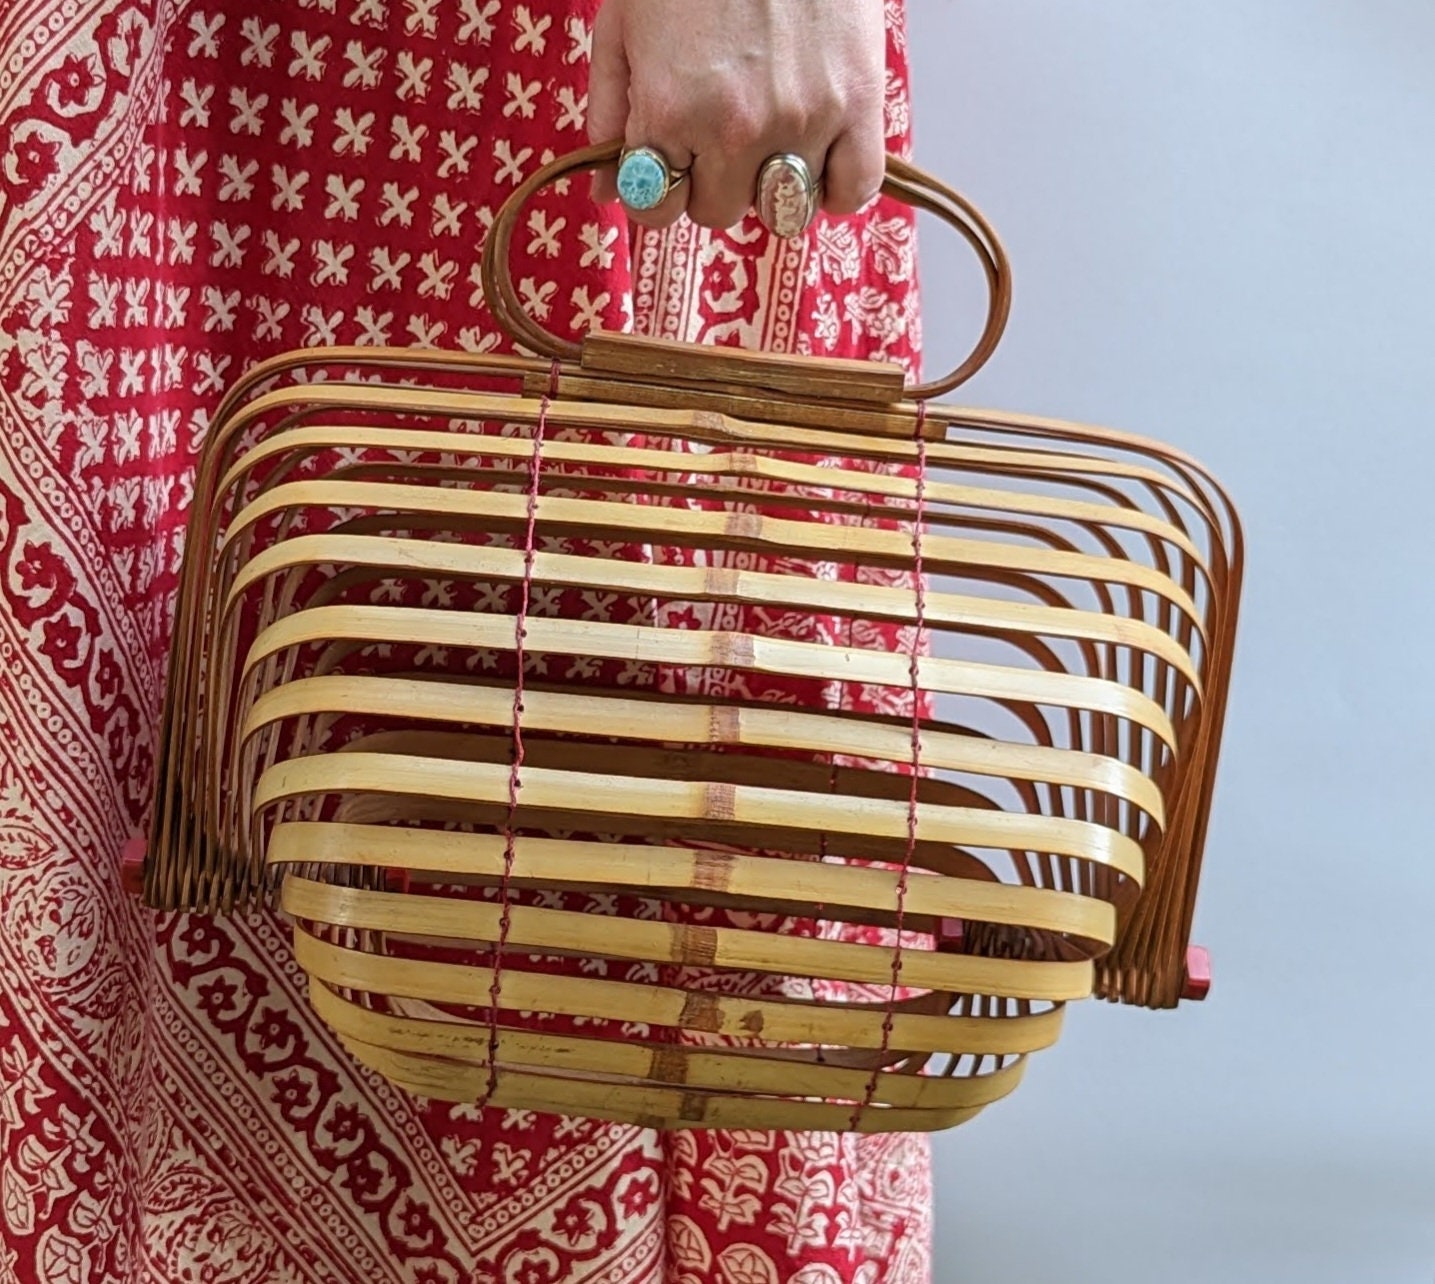 My Unofficial Love Letter to the Loewe Basket Bag - PurseBlog